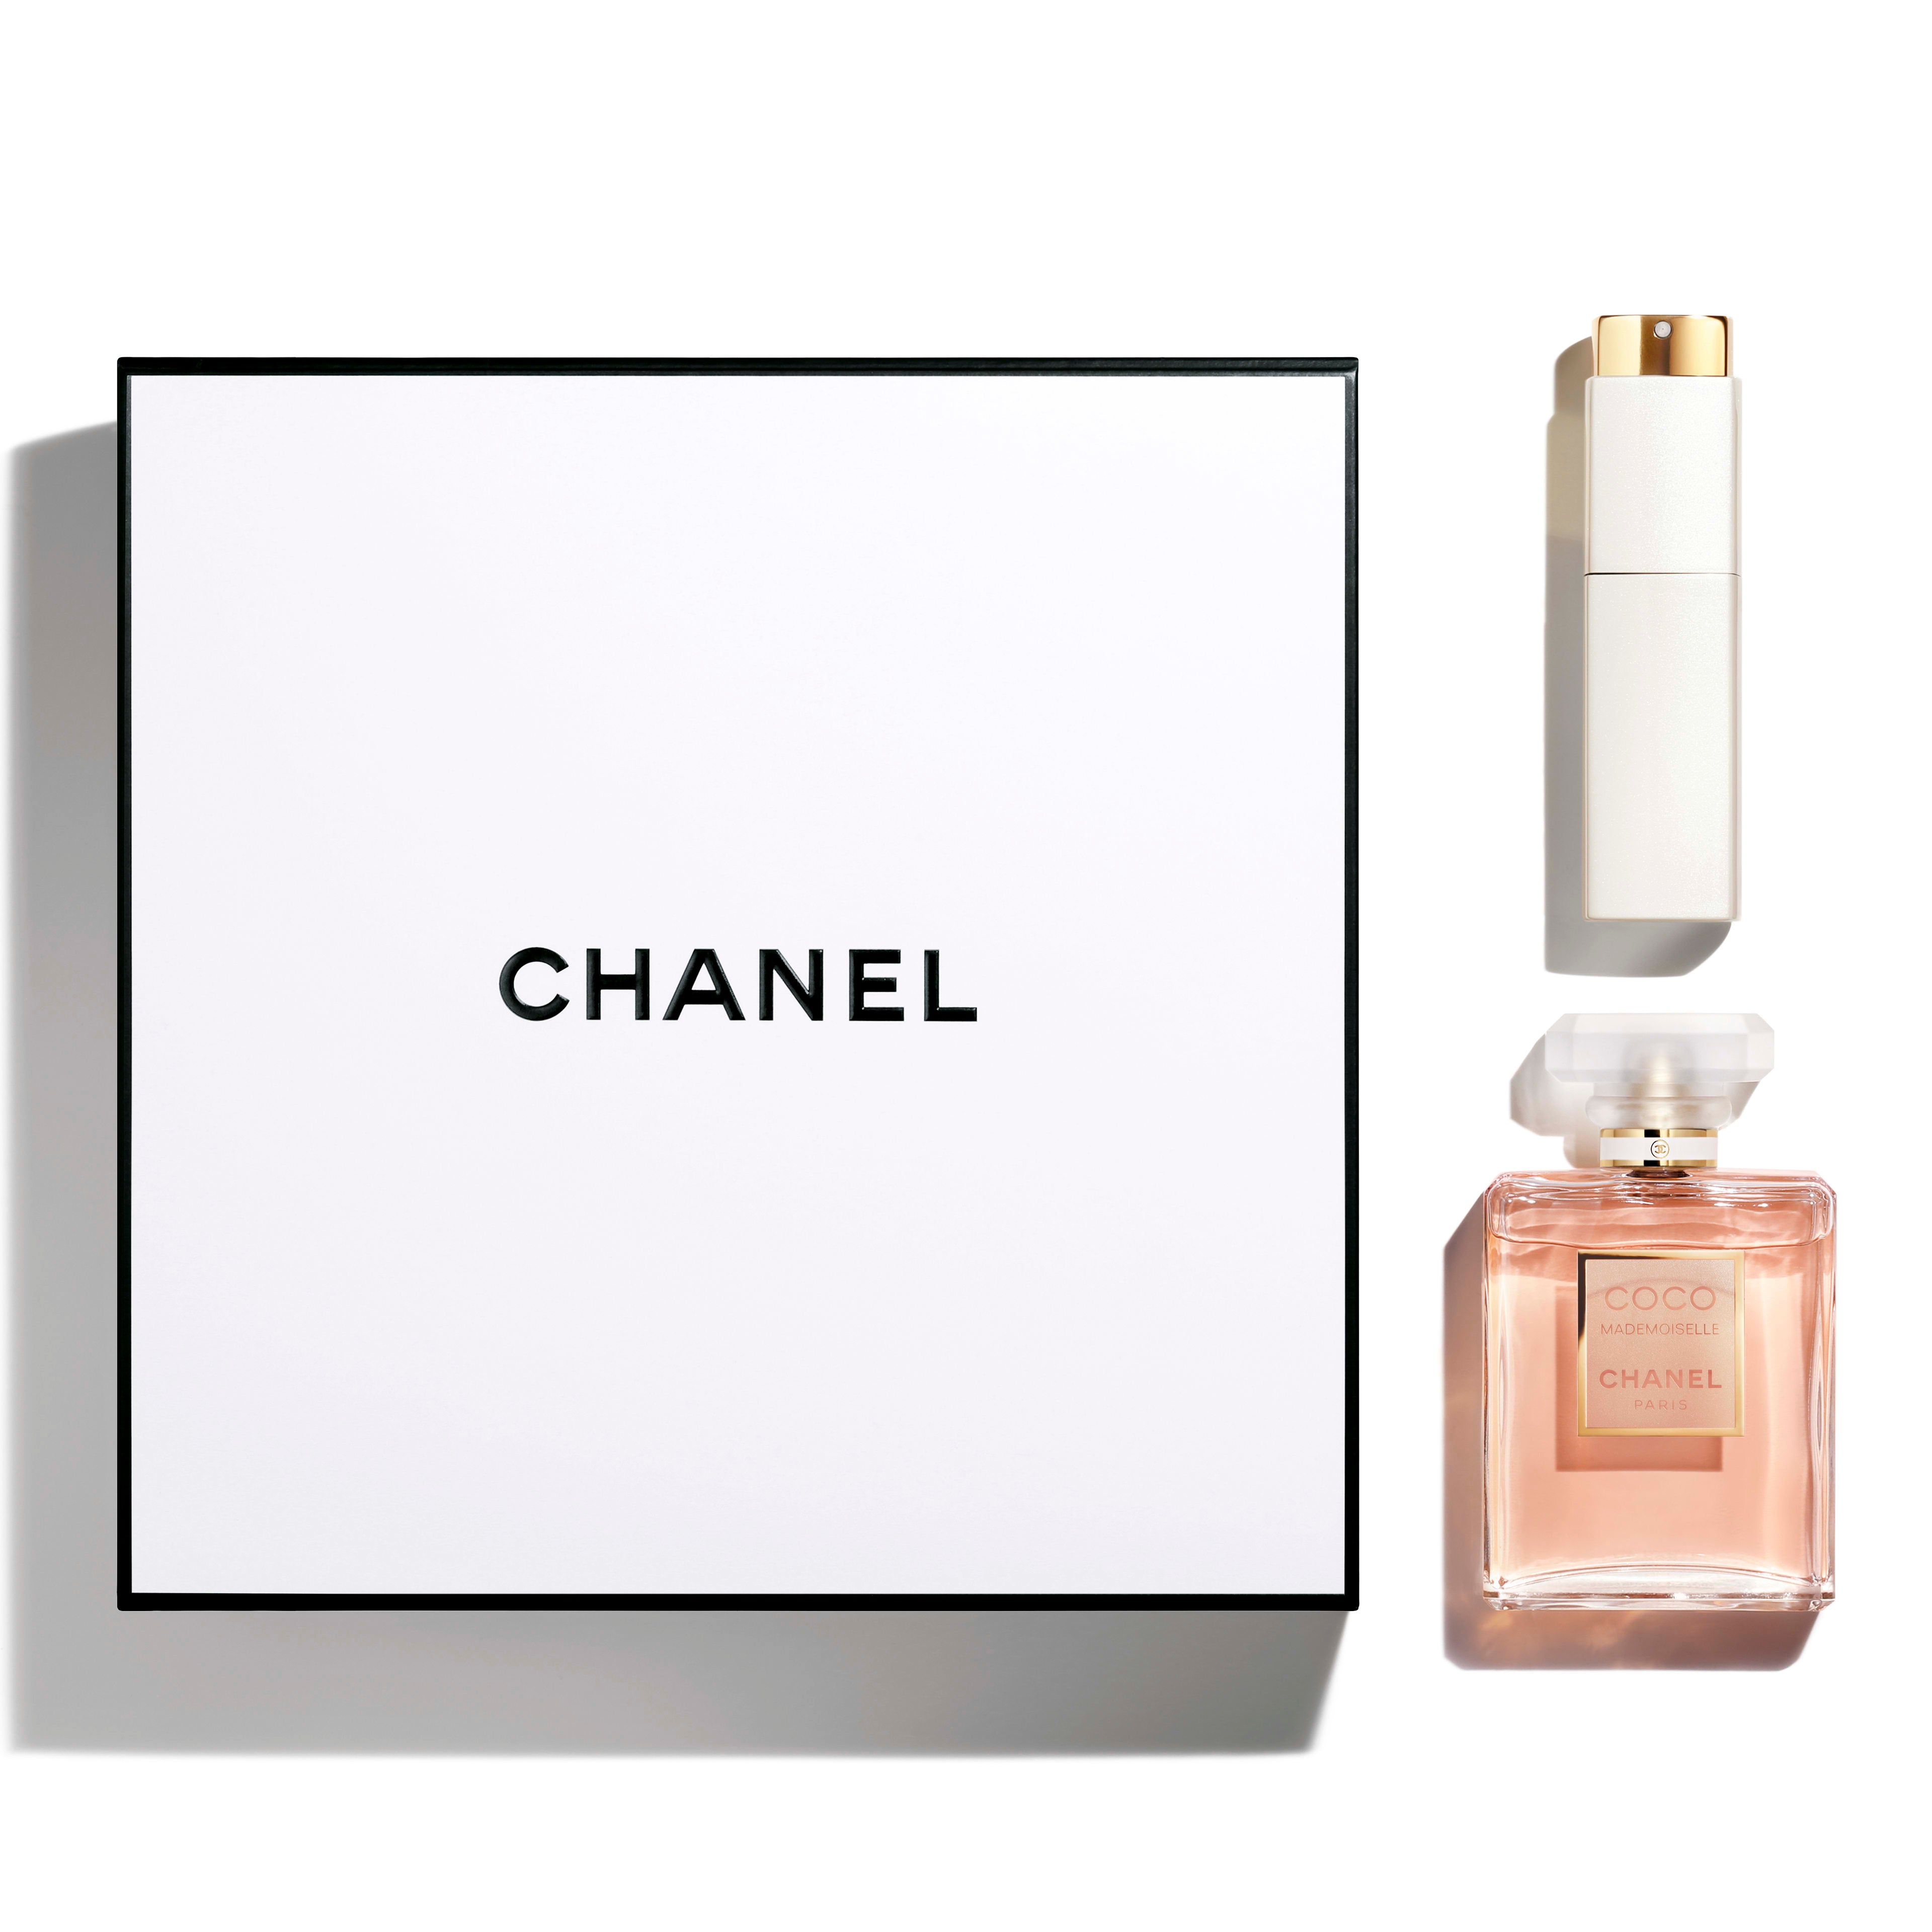 Eau de Toilette Chanel Eau Fraiche, Coco, No. 5, Allure 3x30ml Set 3 in 1  Chanel gift set for women and men - AliExpress